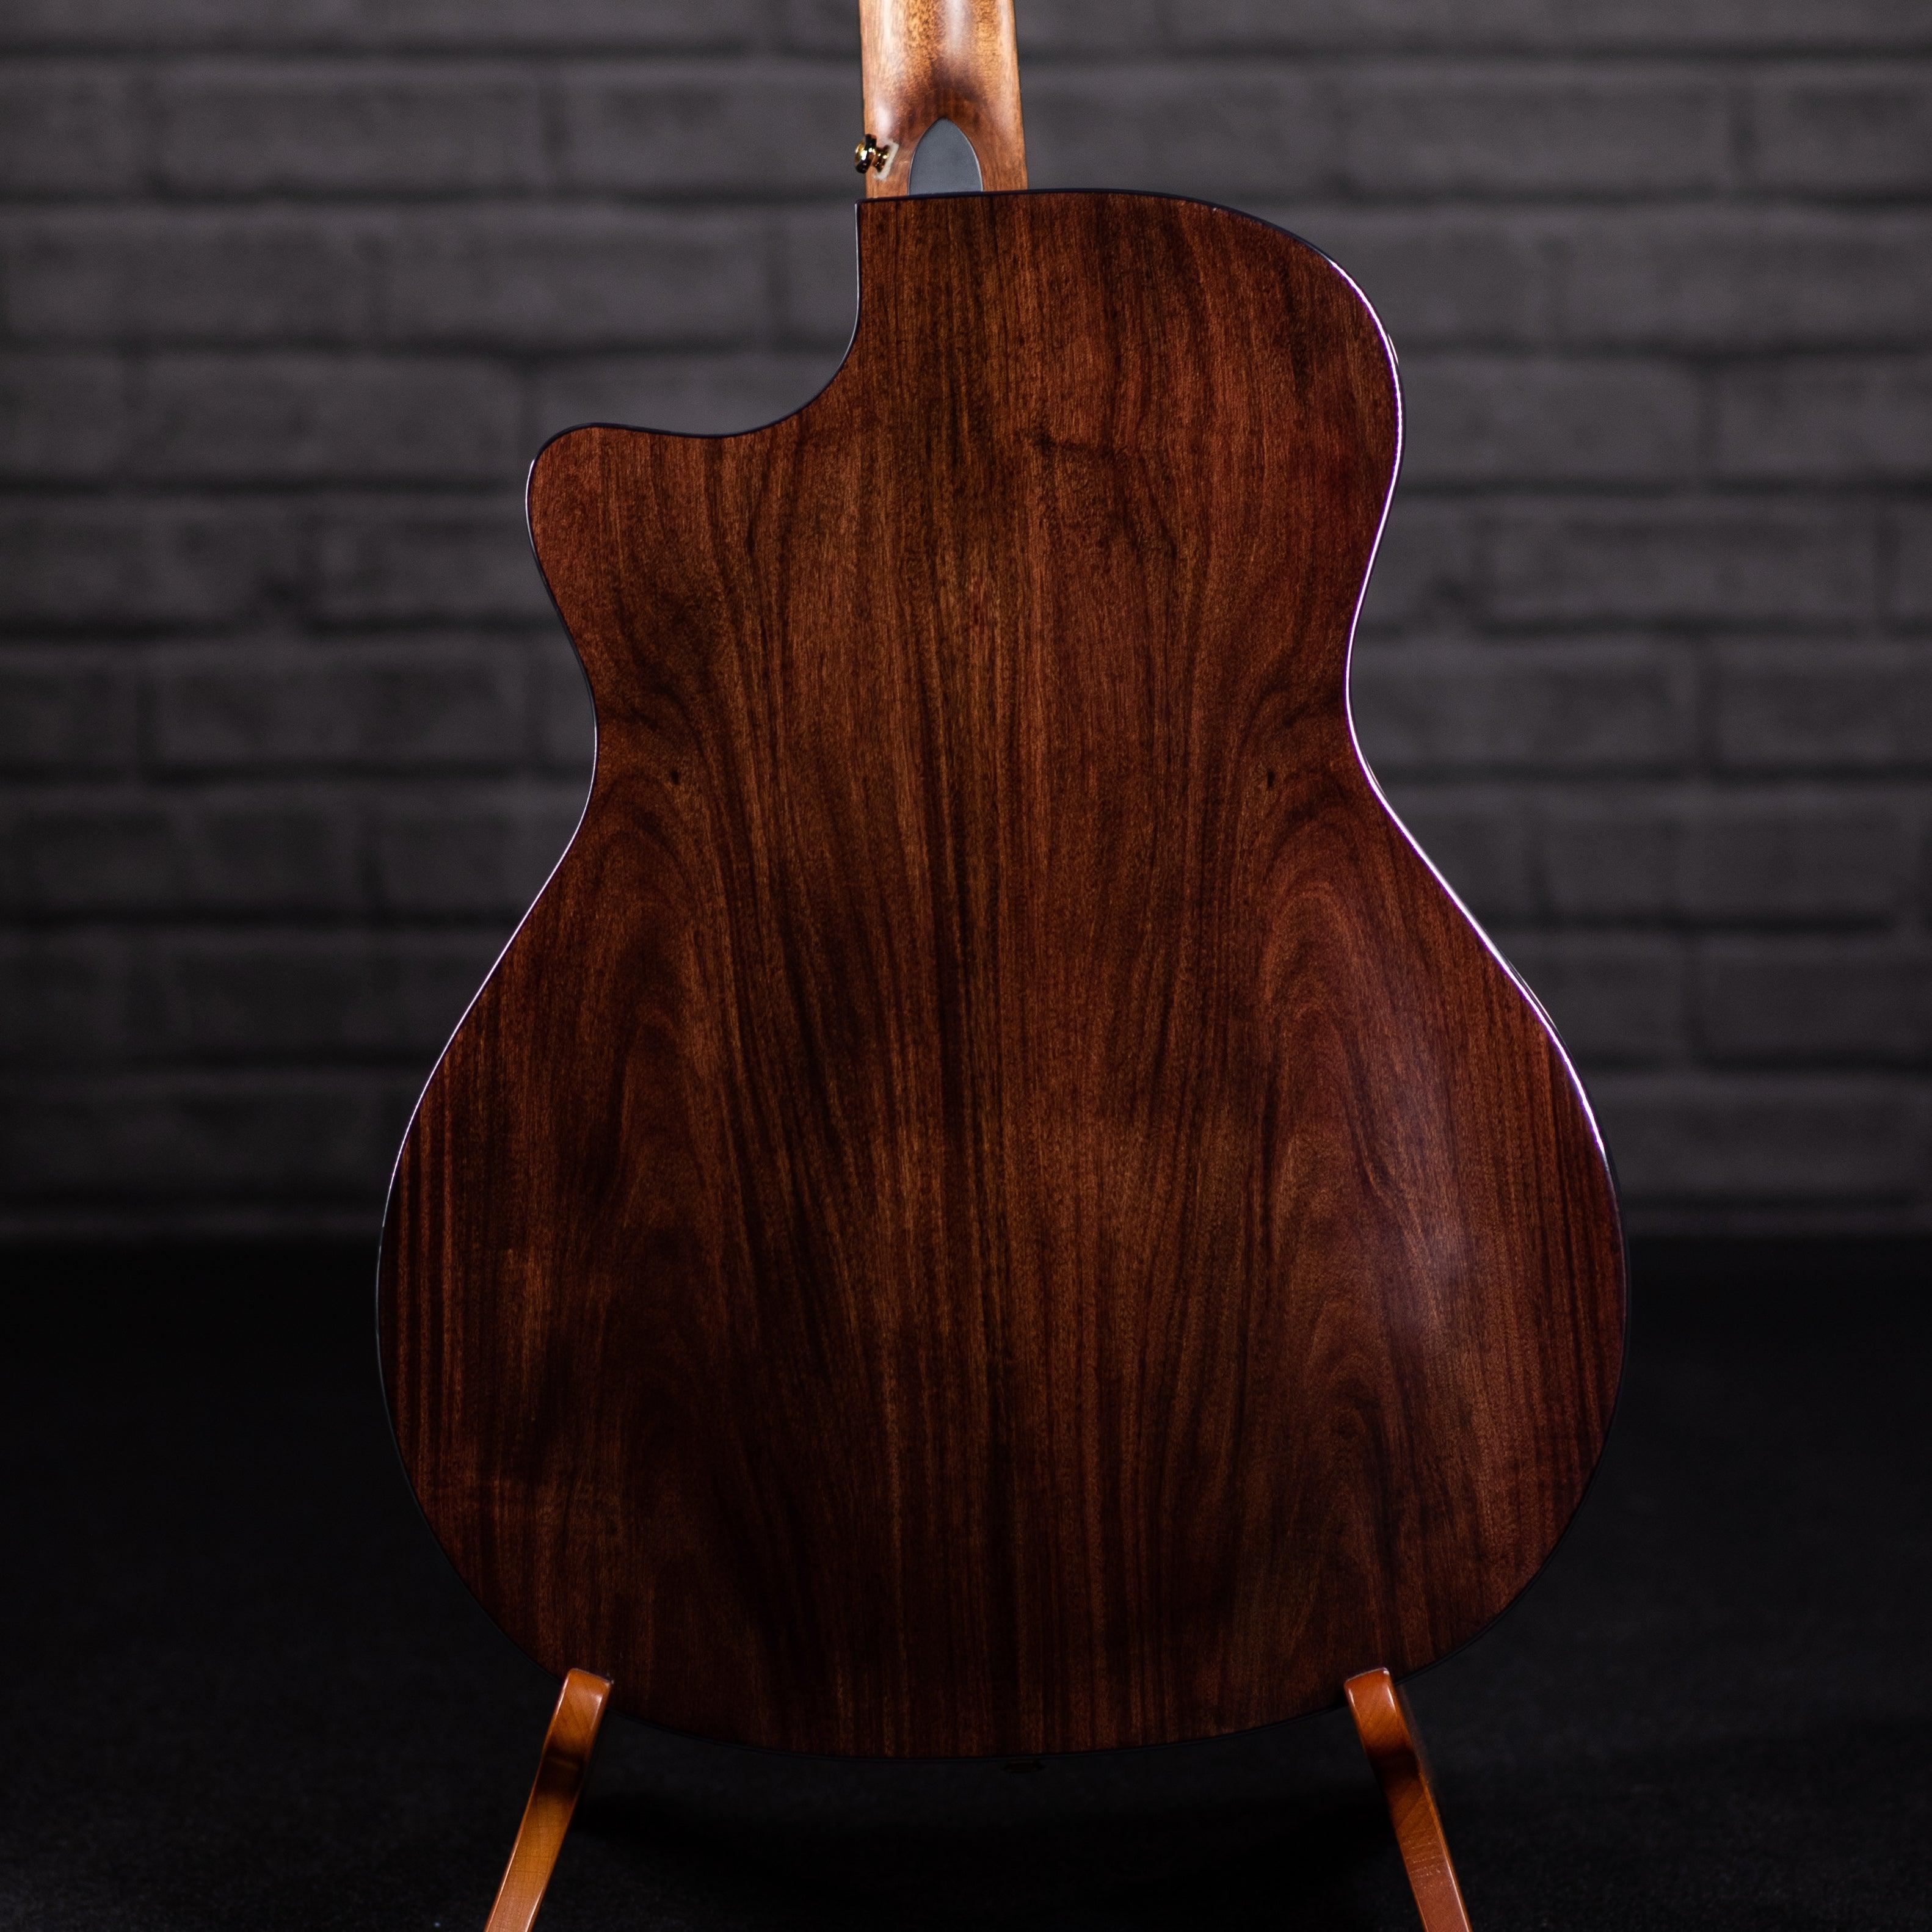 Cort GA-PF Bevel Grand Regal Acoustic Guitar (Clearance) - Impulse Music Co.